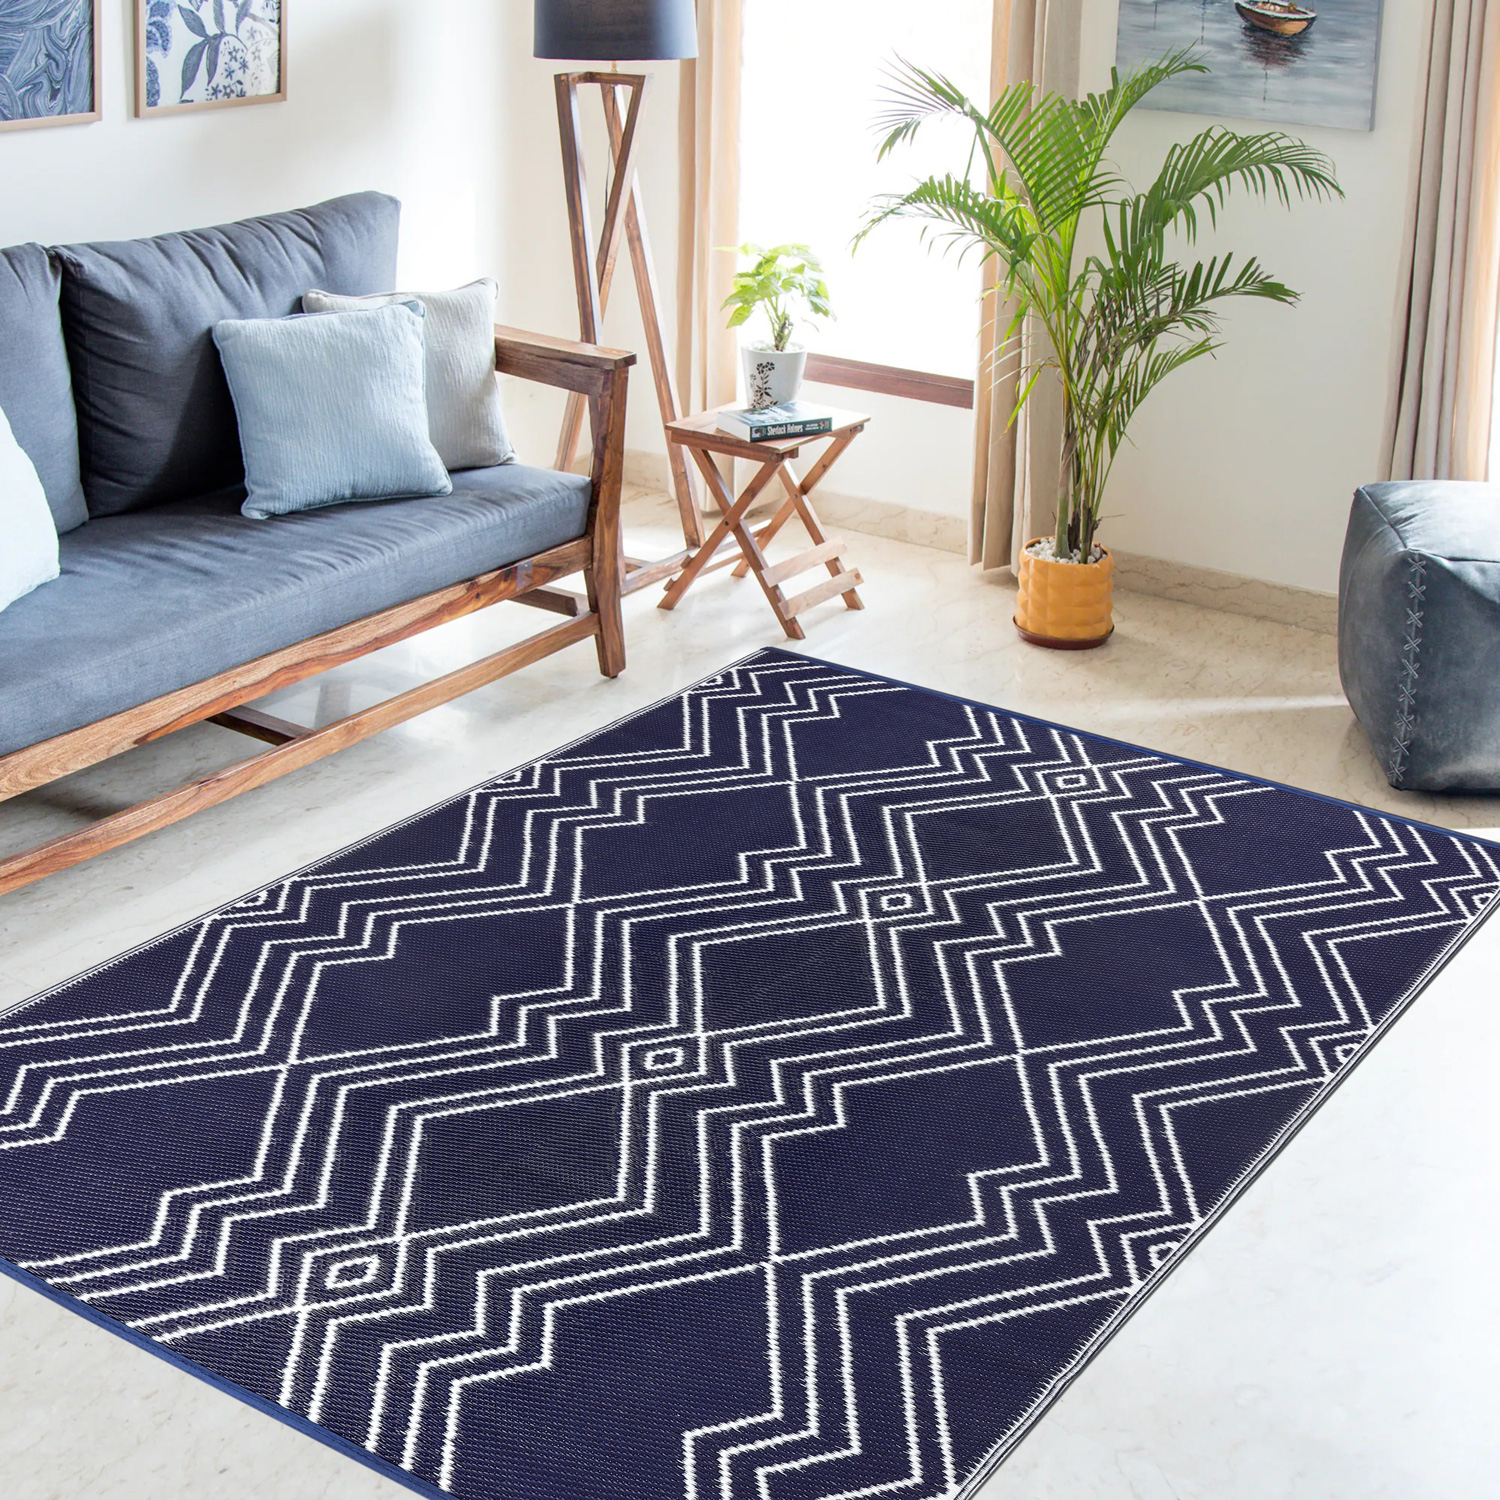 rug for living room